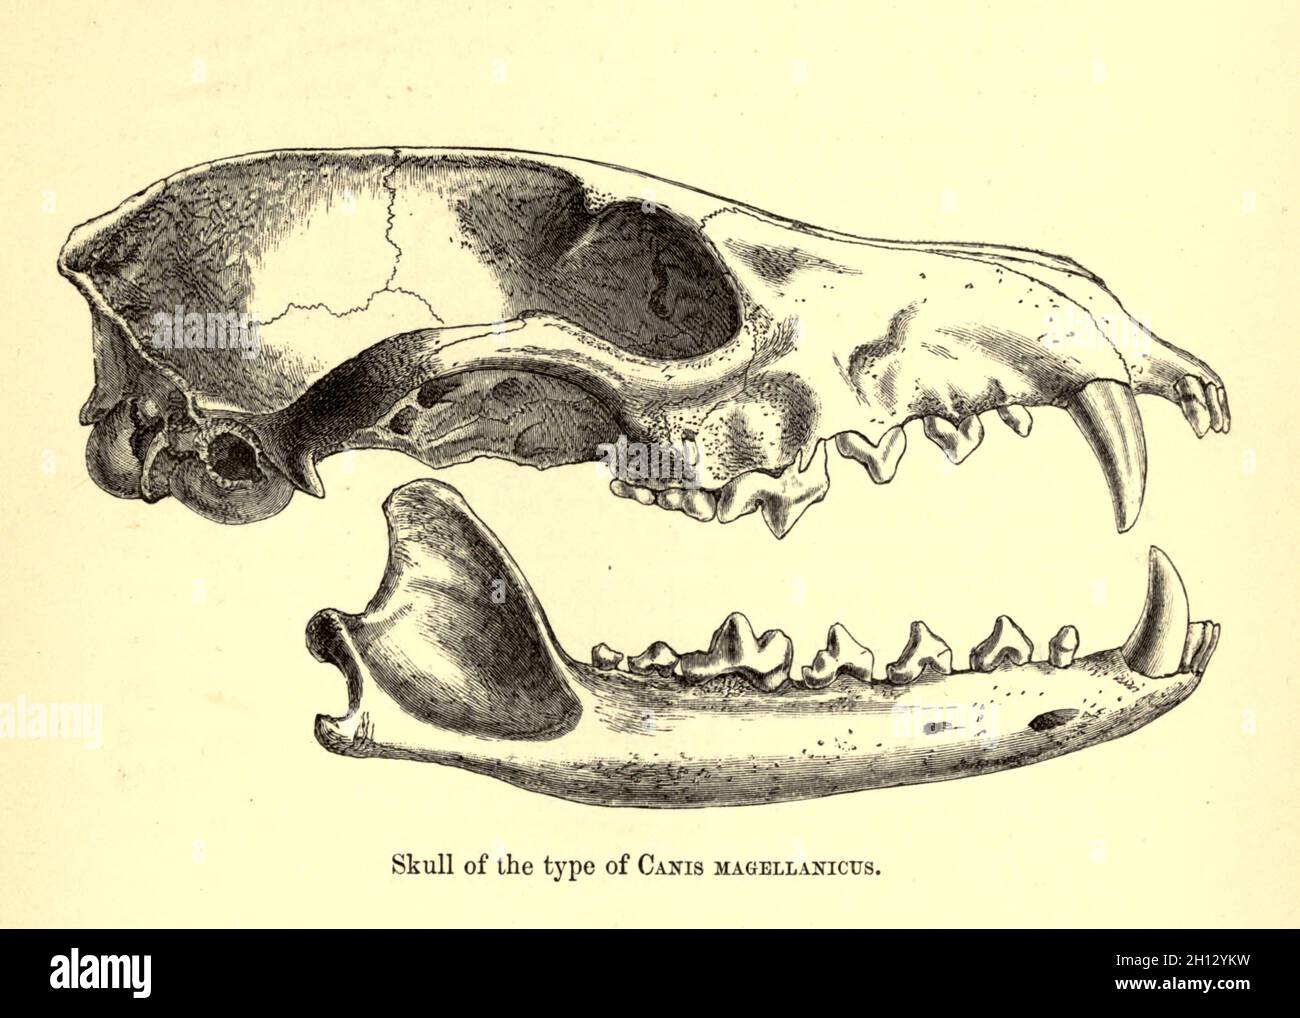 Skull of Canis magellanicus, 19th century illustration Stock Photo